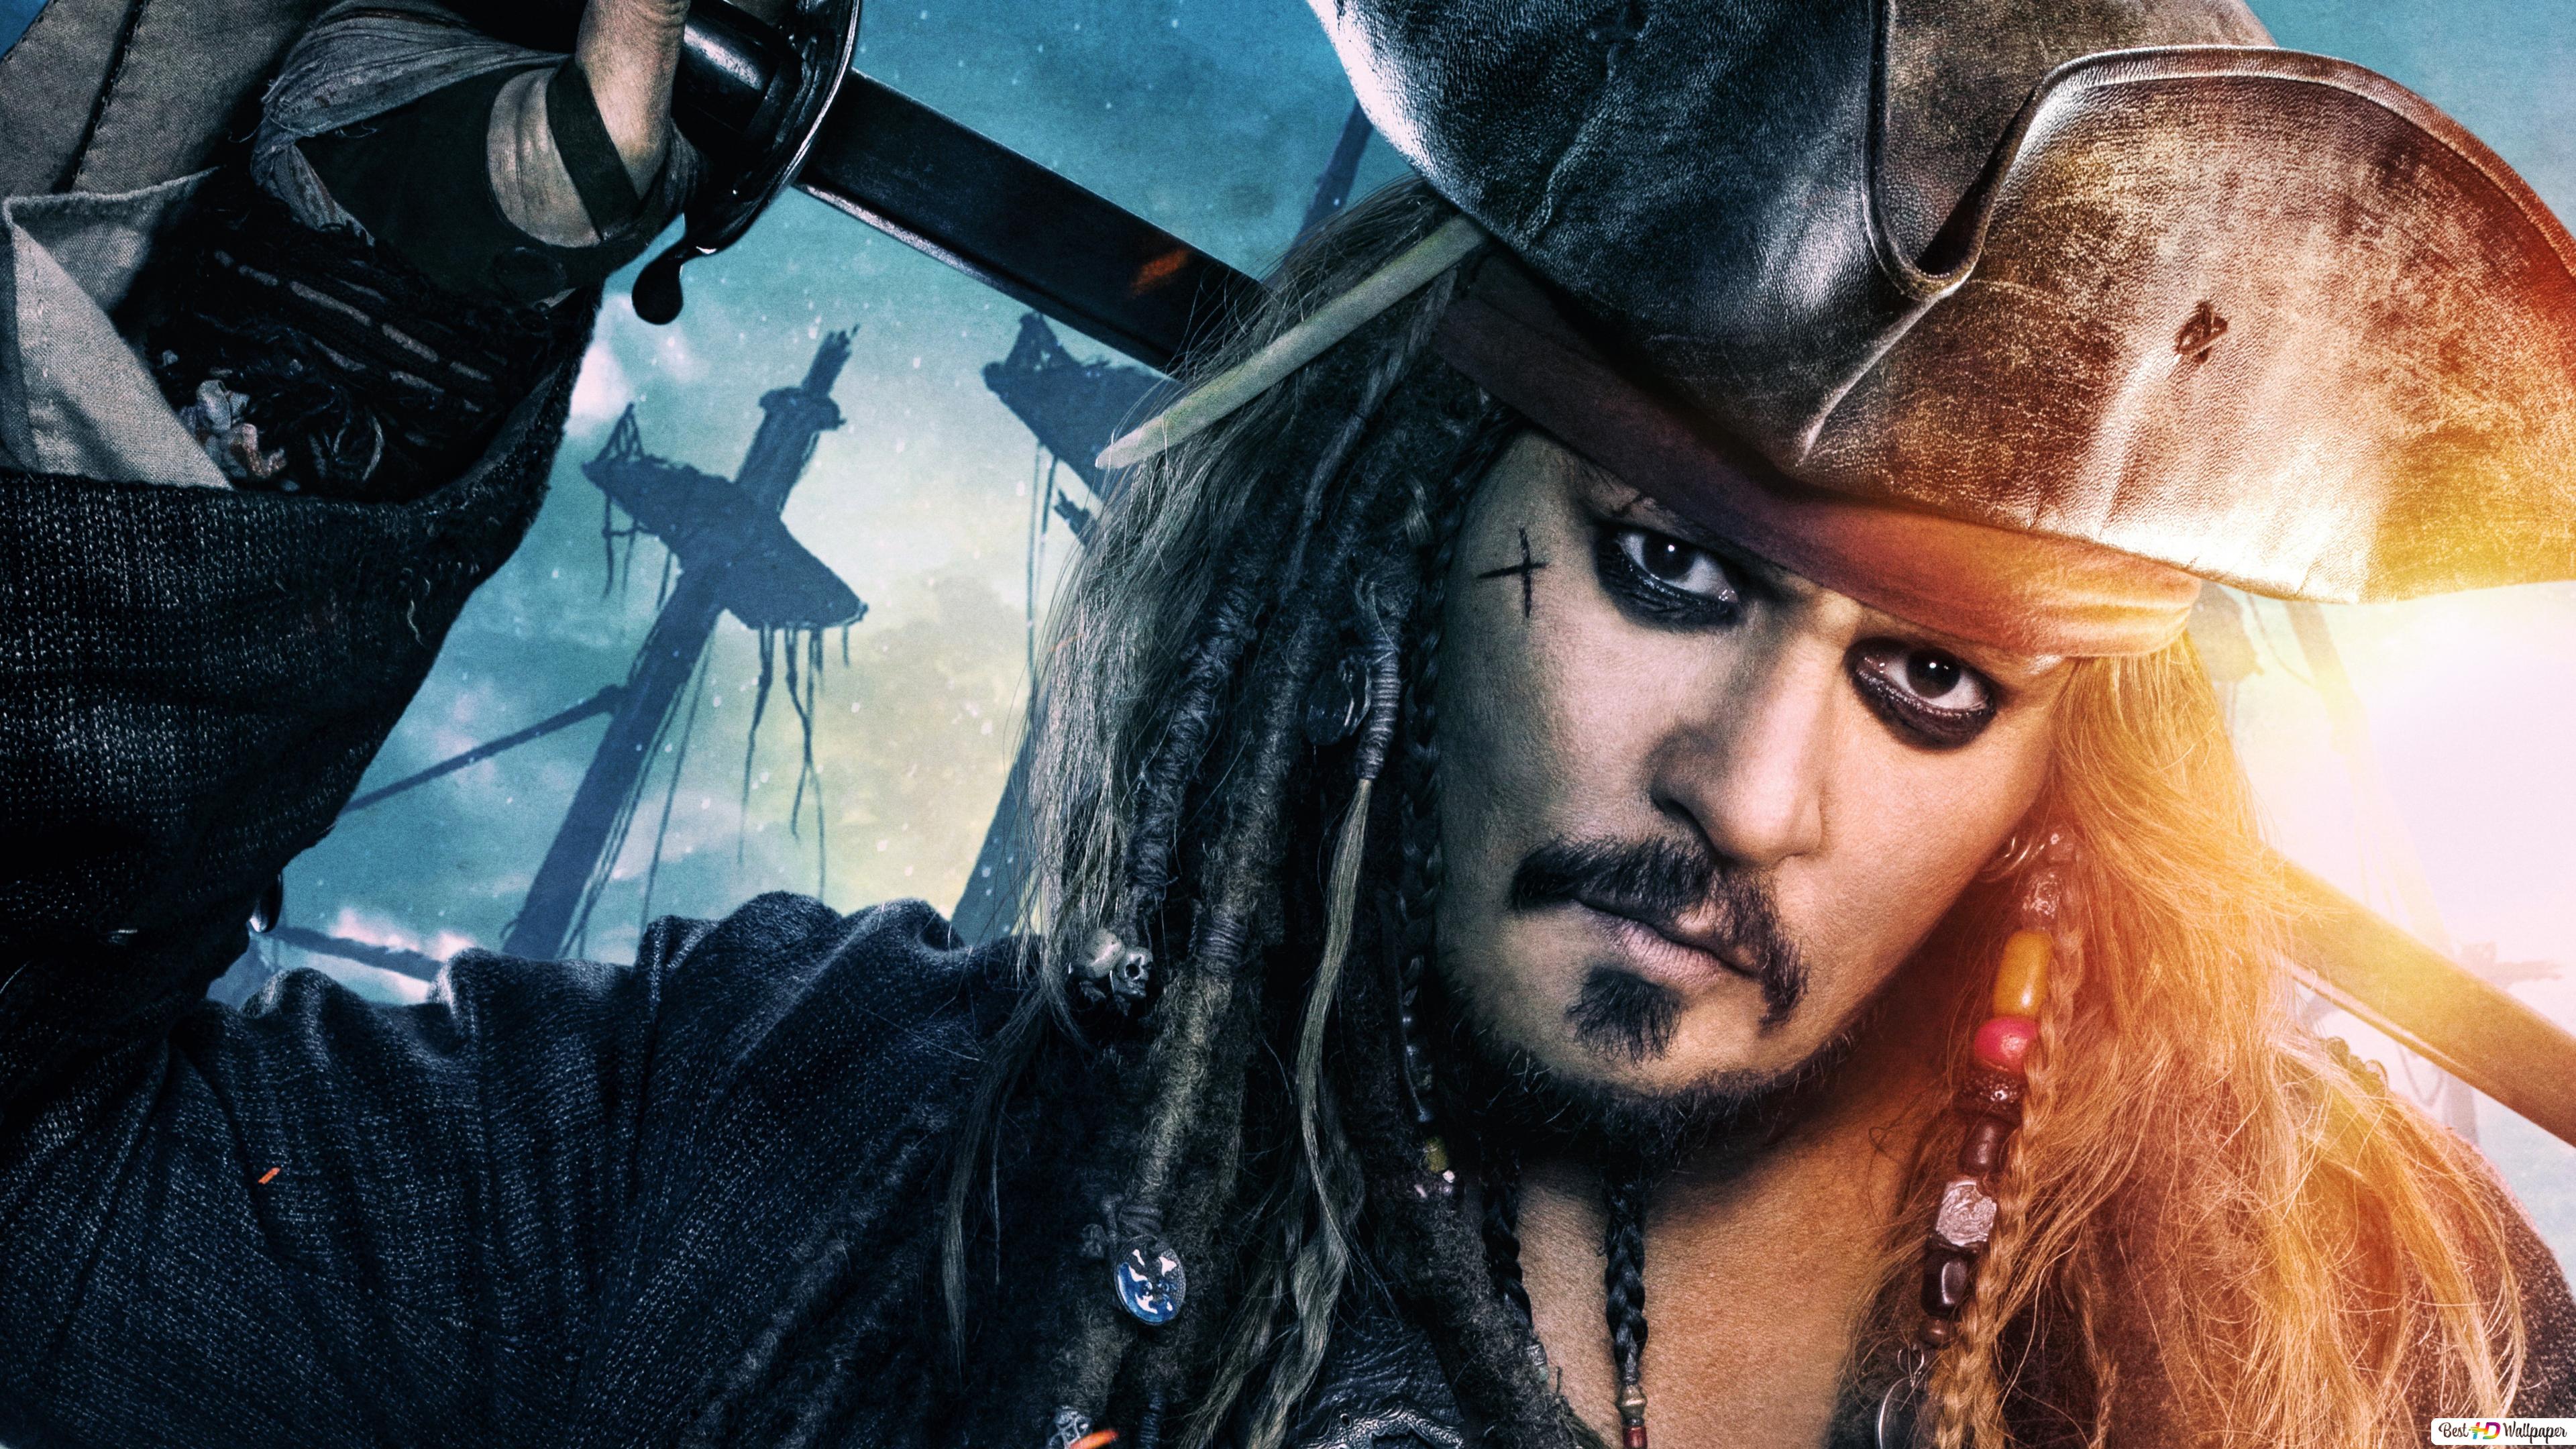 Jack Sparrow Background